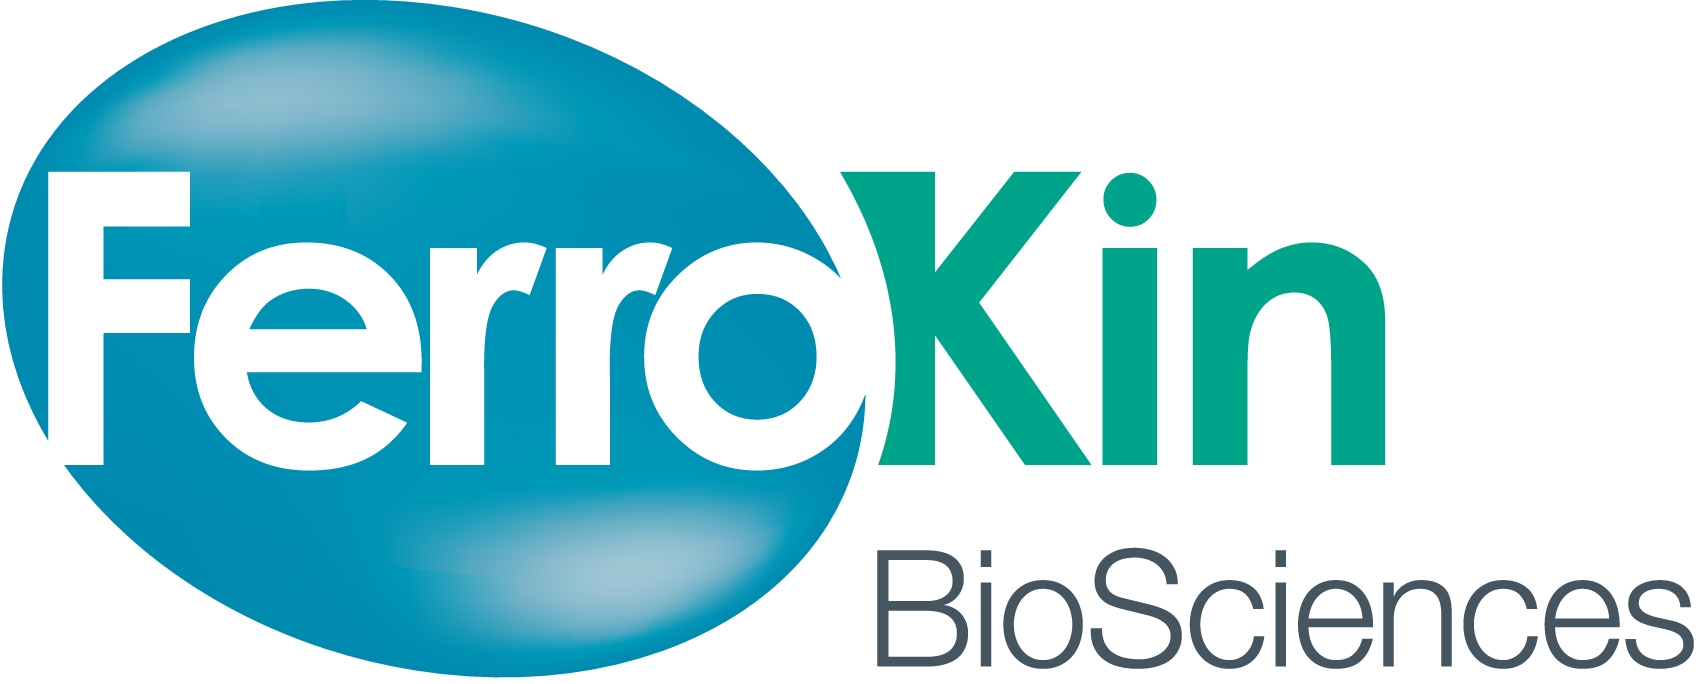 FerroKin BioSciences, Inc. Logo